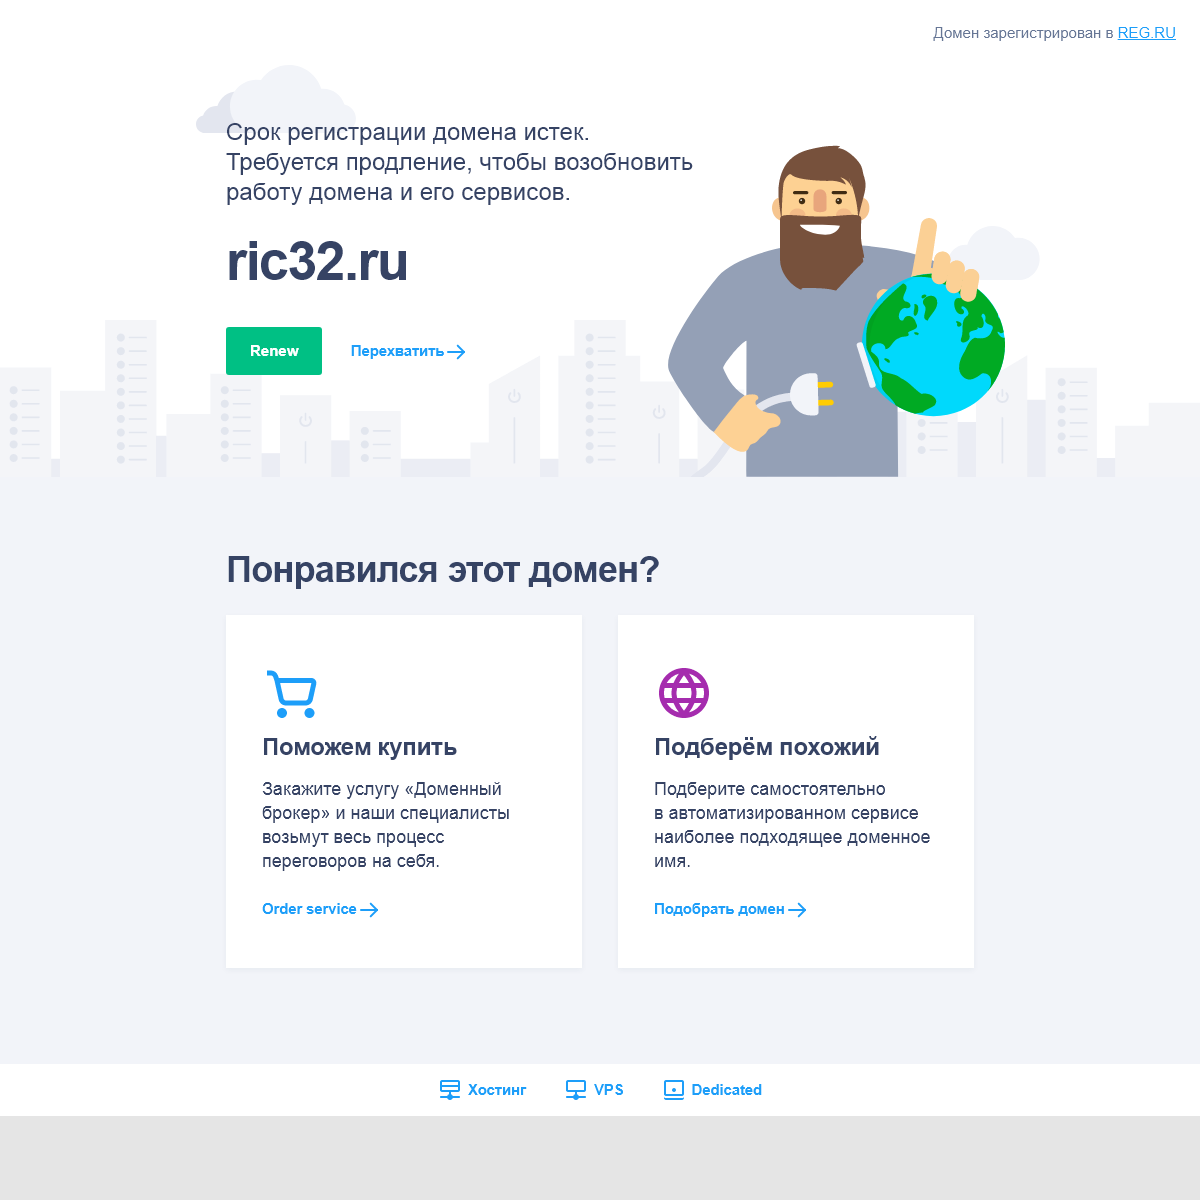 A complete backup of ric32.ru